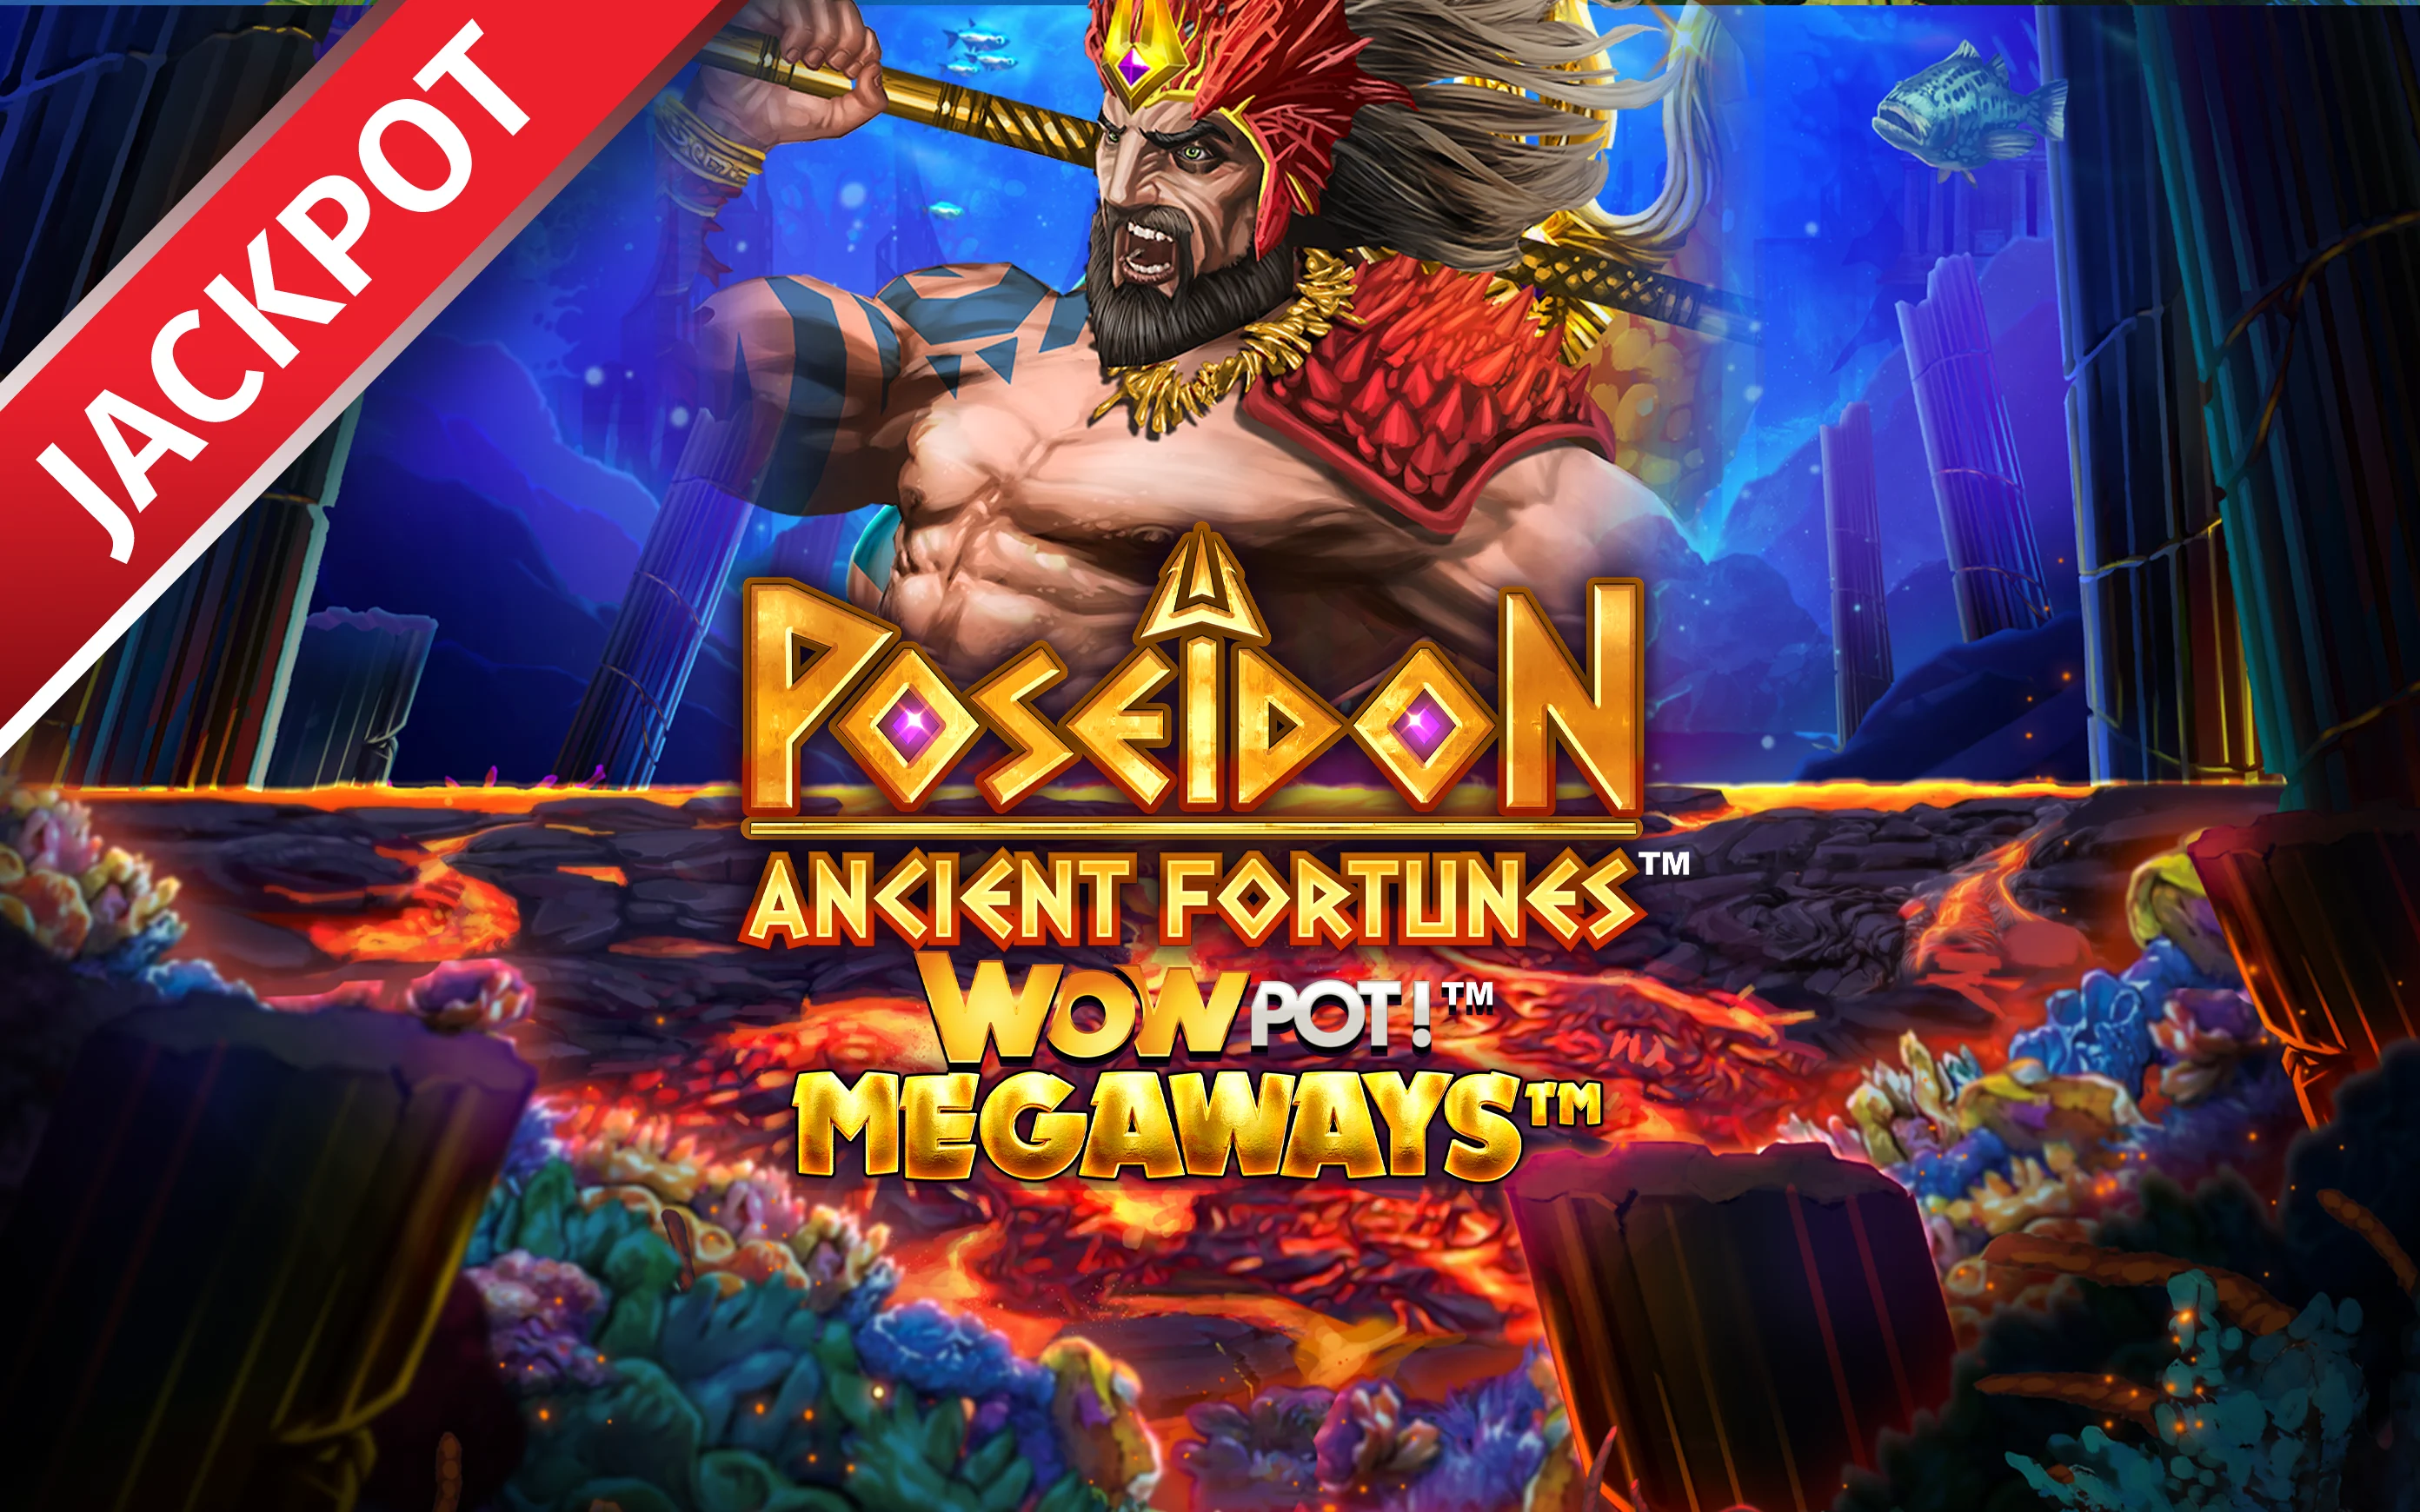 Грайте у Ancient Fortunes: Poseidon™ WowPot! MEGAWAYS™ в онлайн-казино Starcasino.be